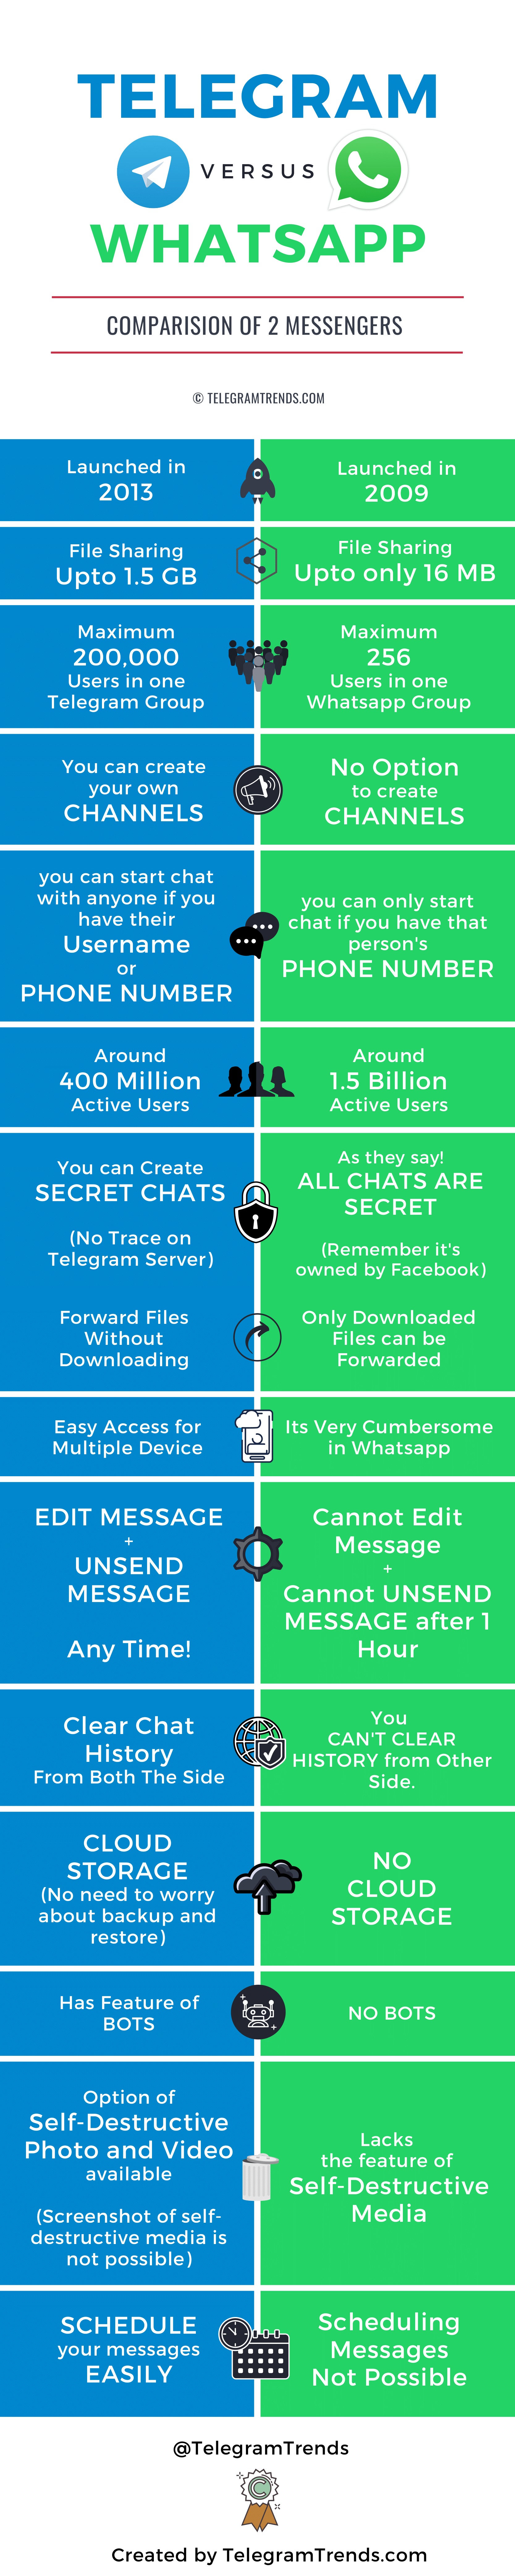 Telegram vs Whatsapp infographics 2020 - Latest Detailed Complete Comparison